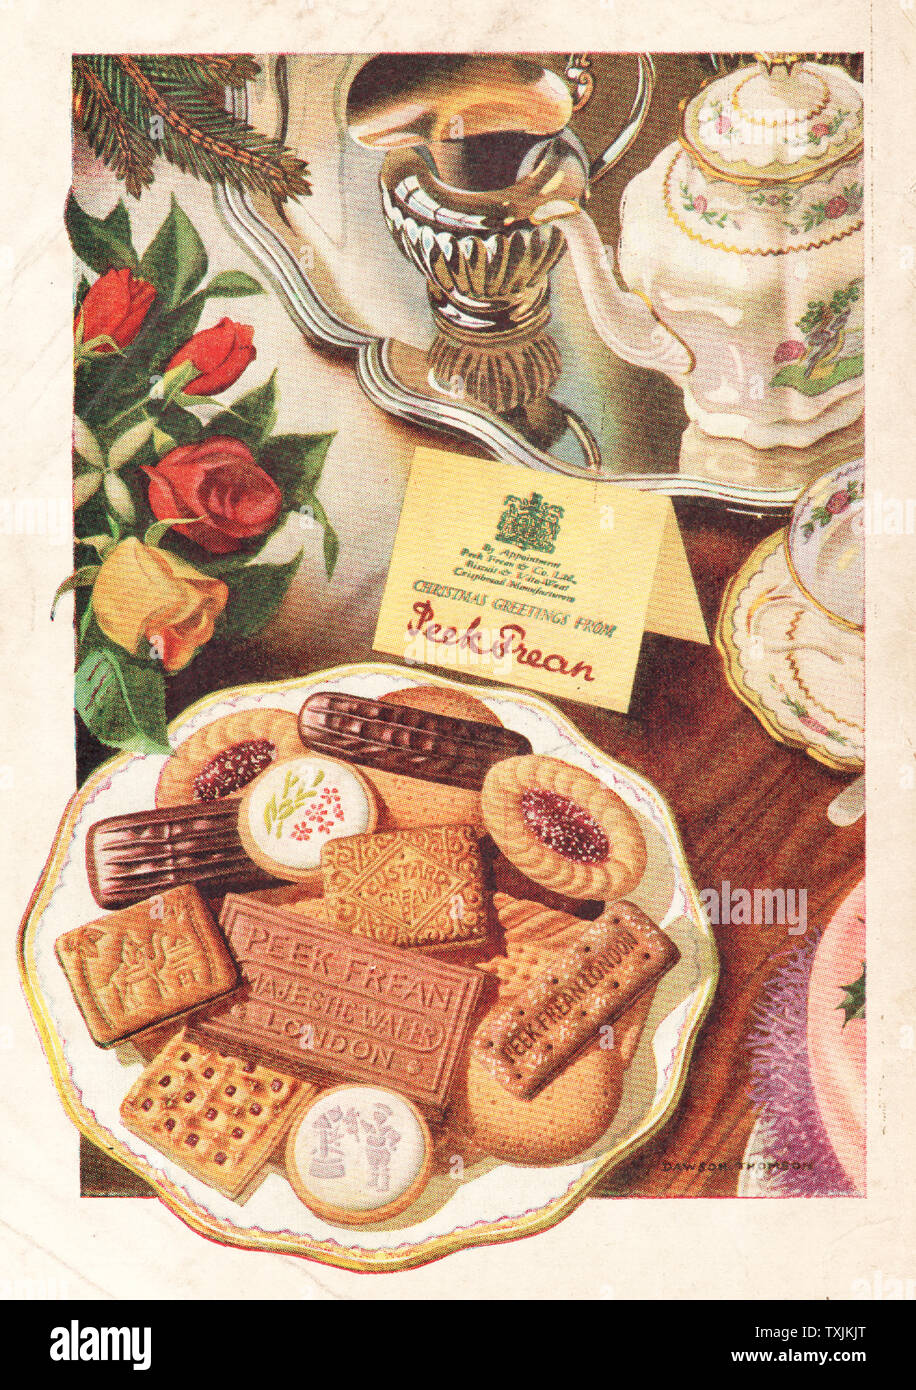 1947 UK Magazine Peek Frean Biscuits Advert Stock Photo